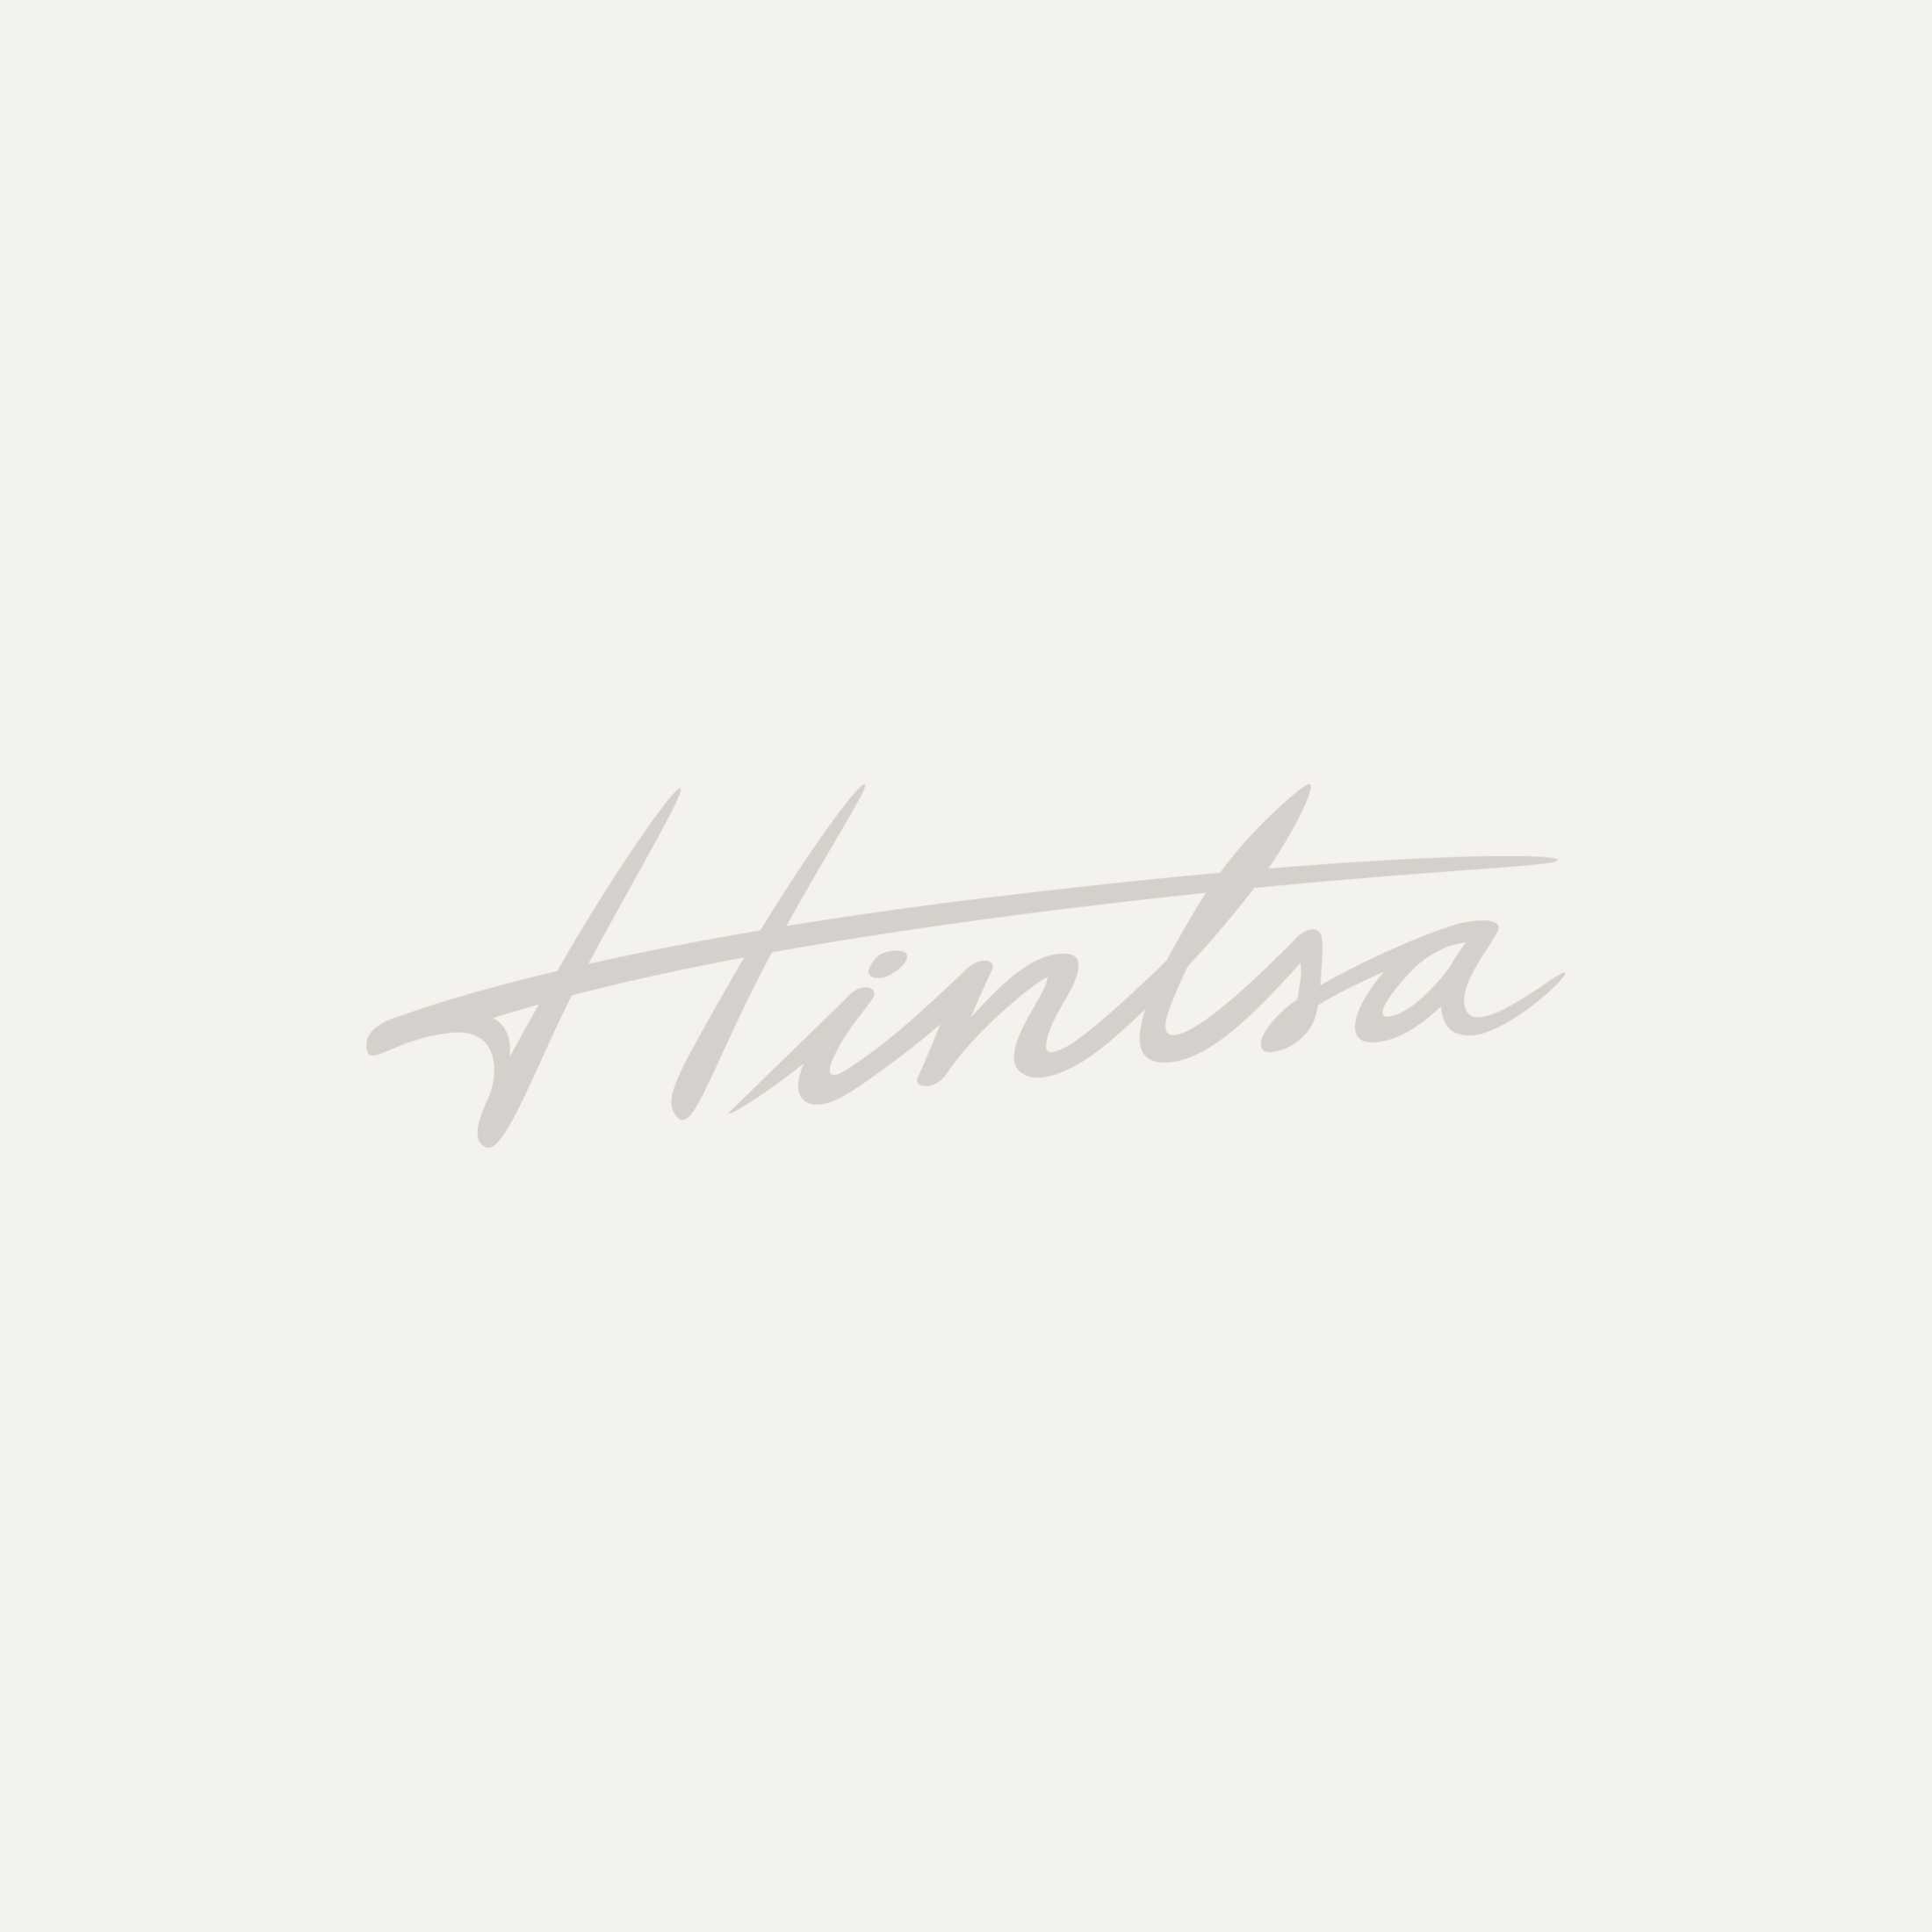 Old Hintsa logo